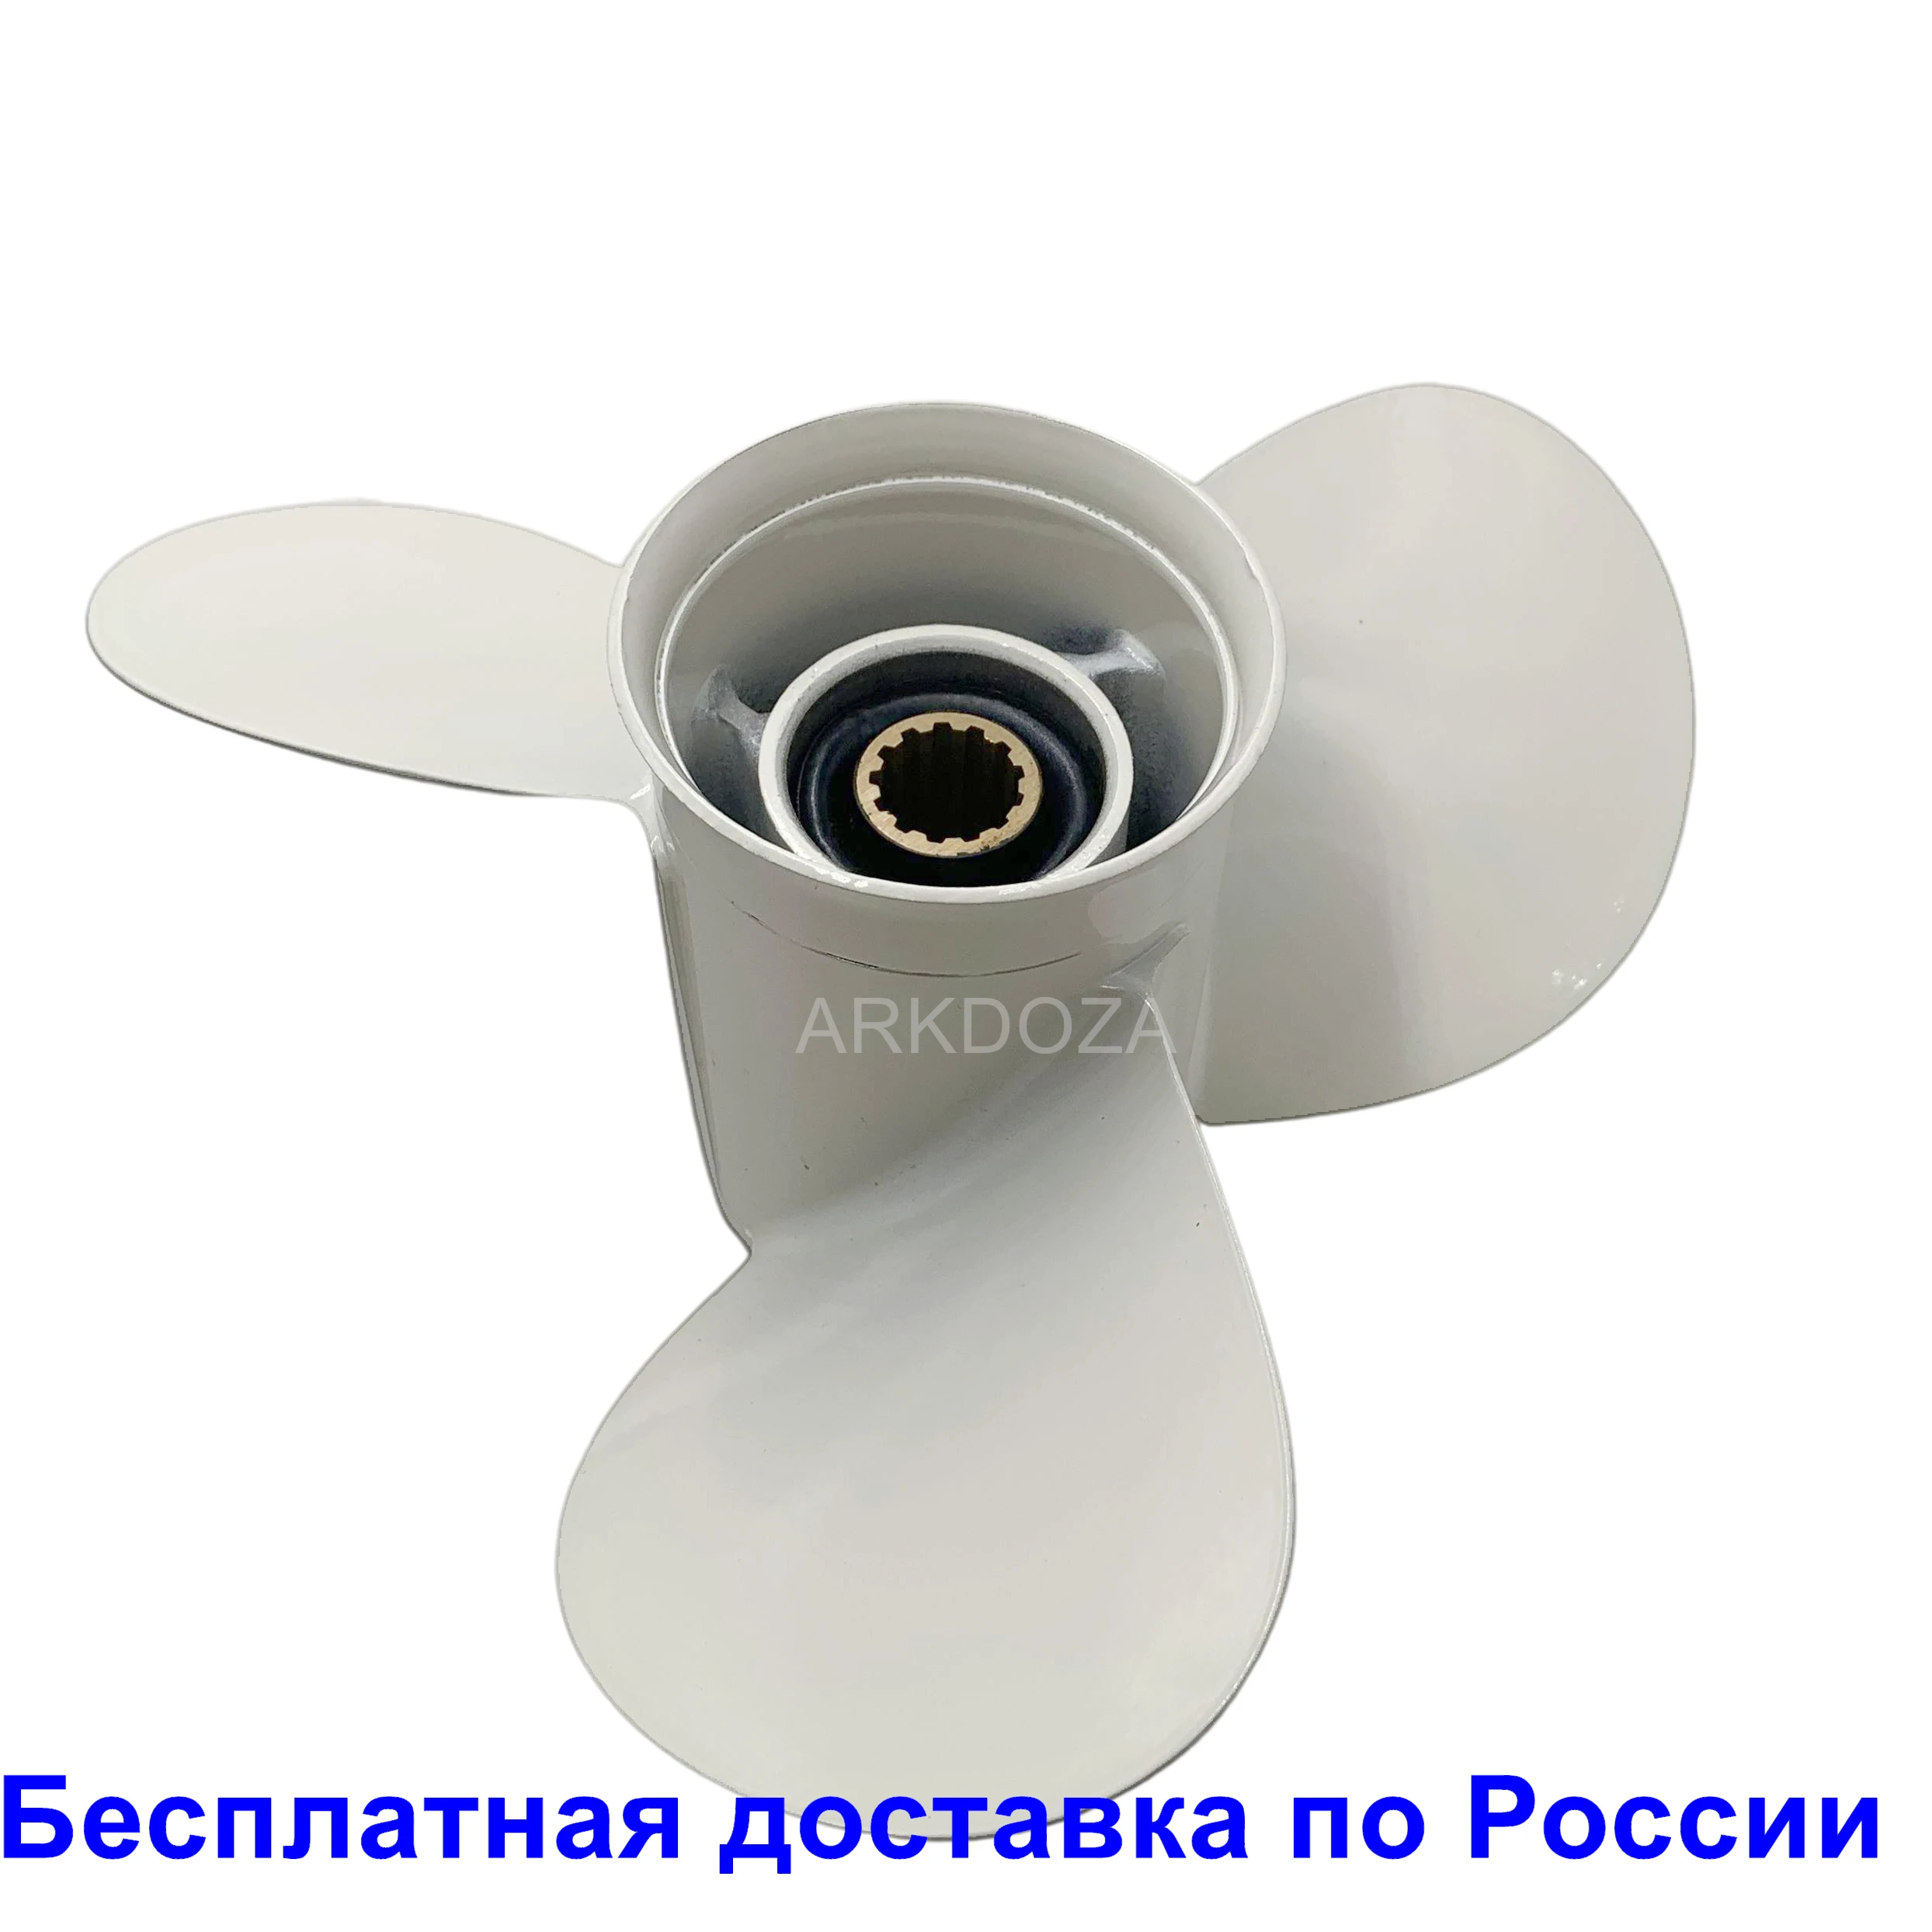 Boat propeller suit for Yamaha 11x15 aluminum prop 40-55HP 3 blade 13 tooth RH OEM No: 69W-45943-00-EL